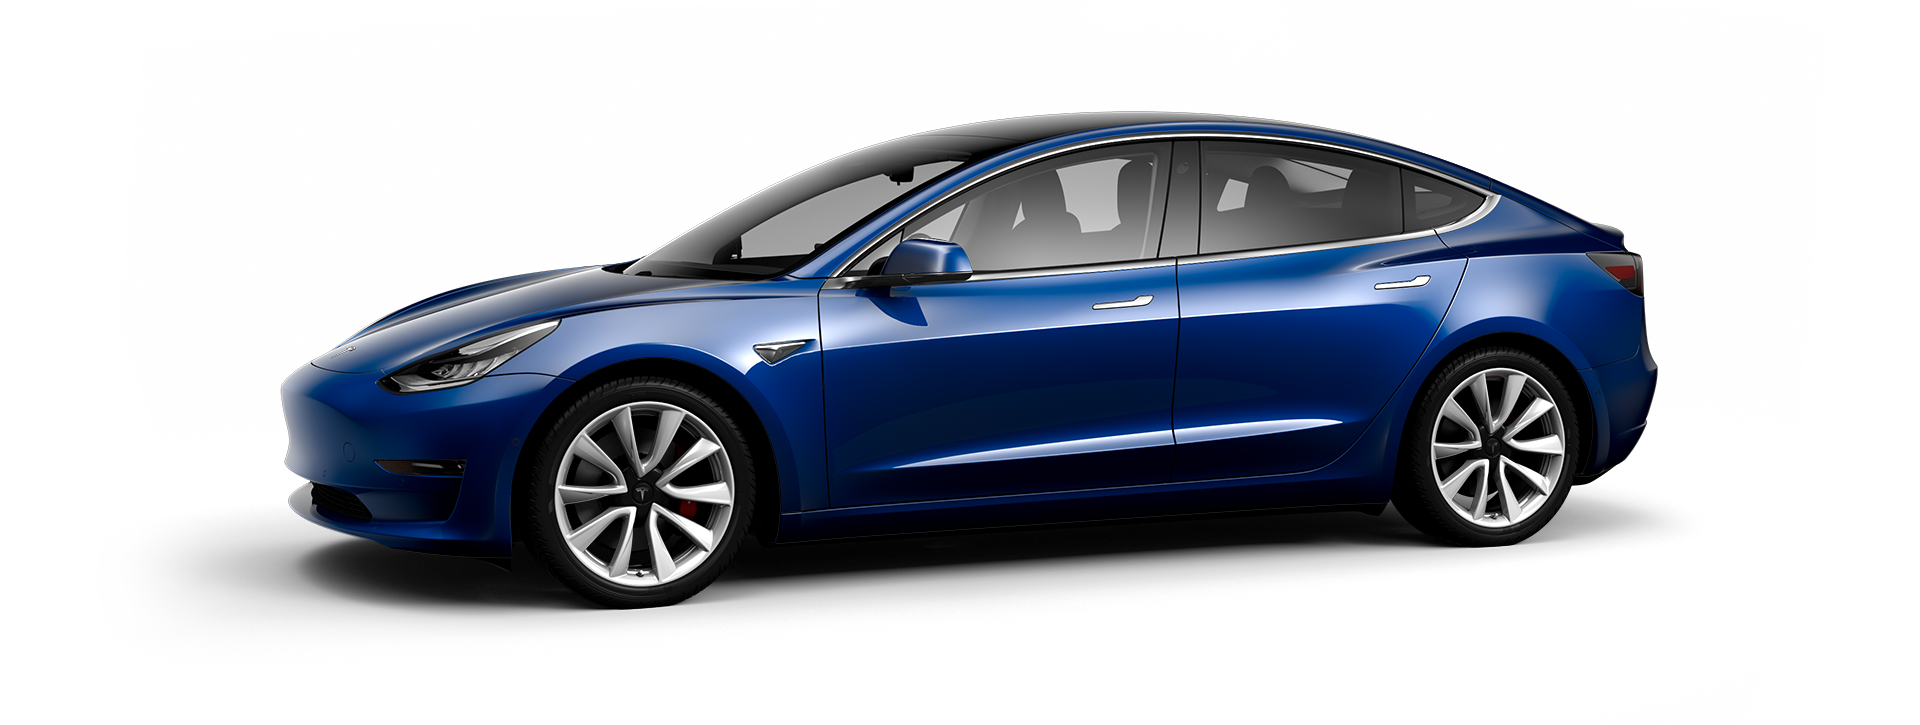 Blue Tesla S Car